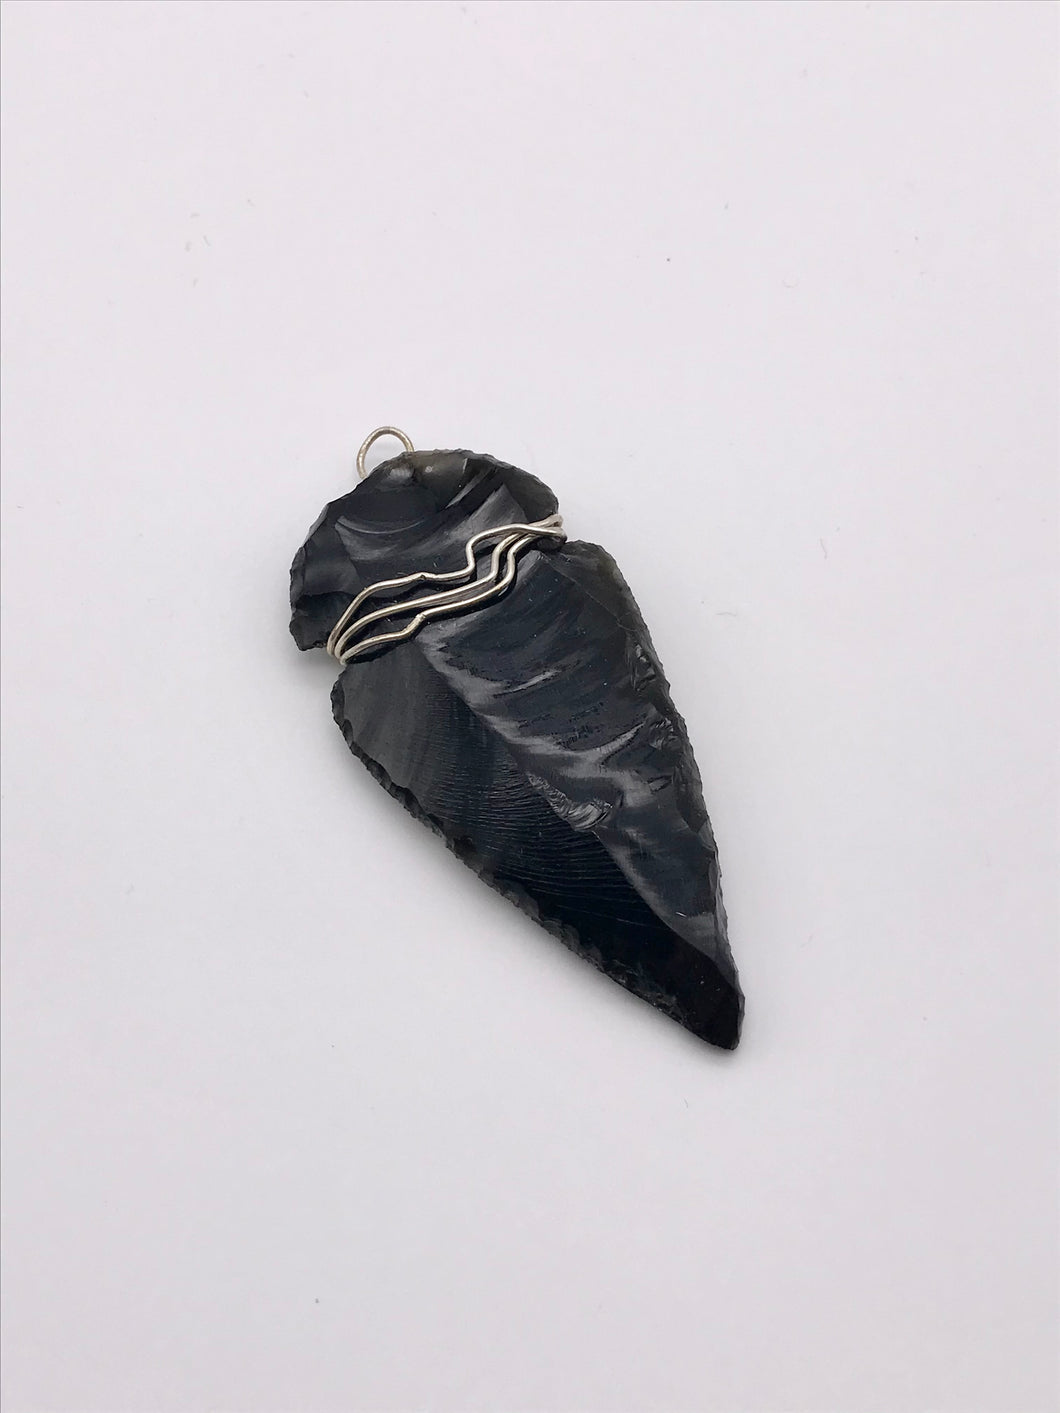 Obsidian Arrowhead Silver Wire Wrapped Pendant